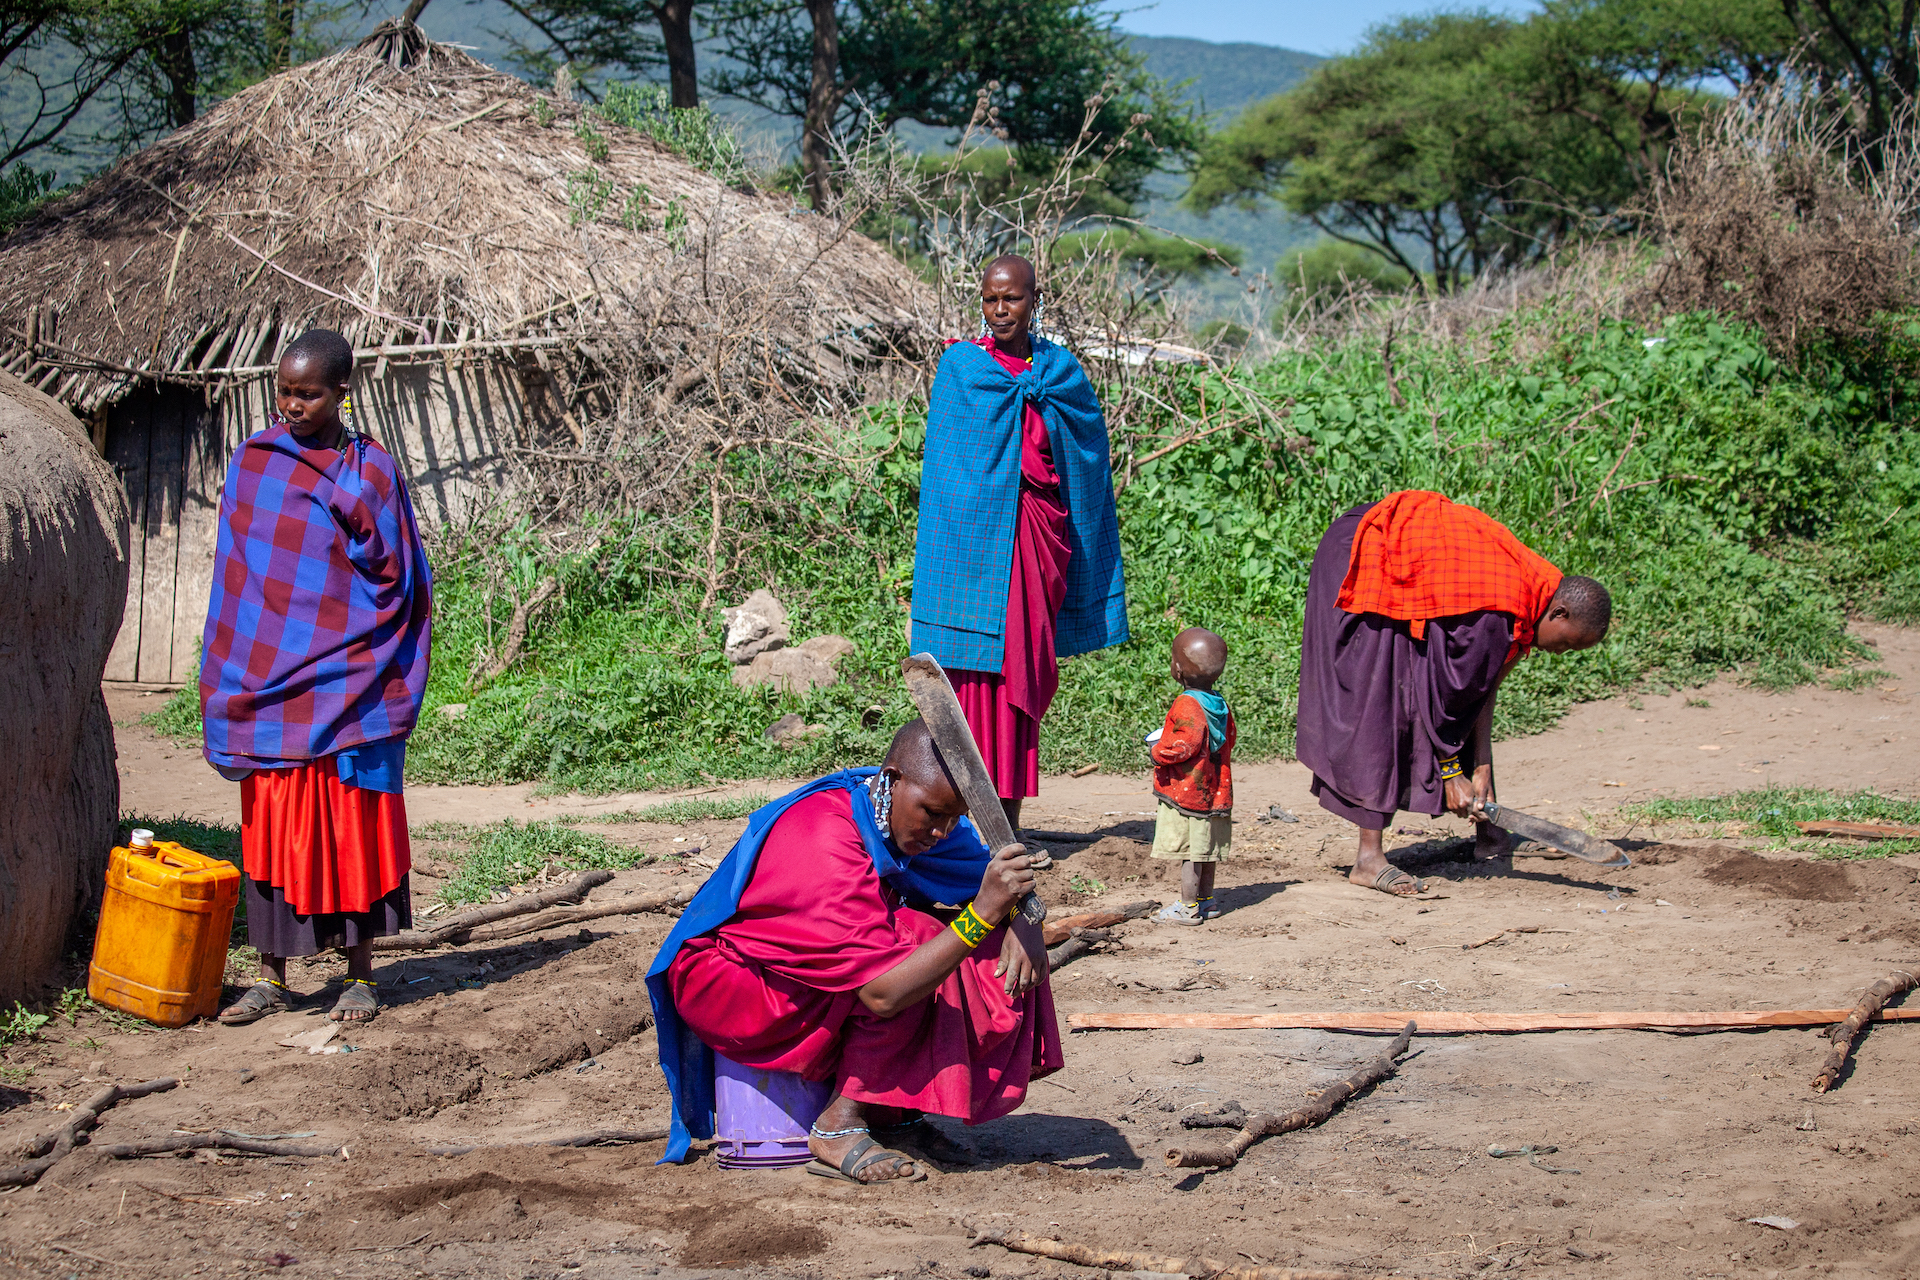 Ženy staví chýši, Masajové